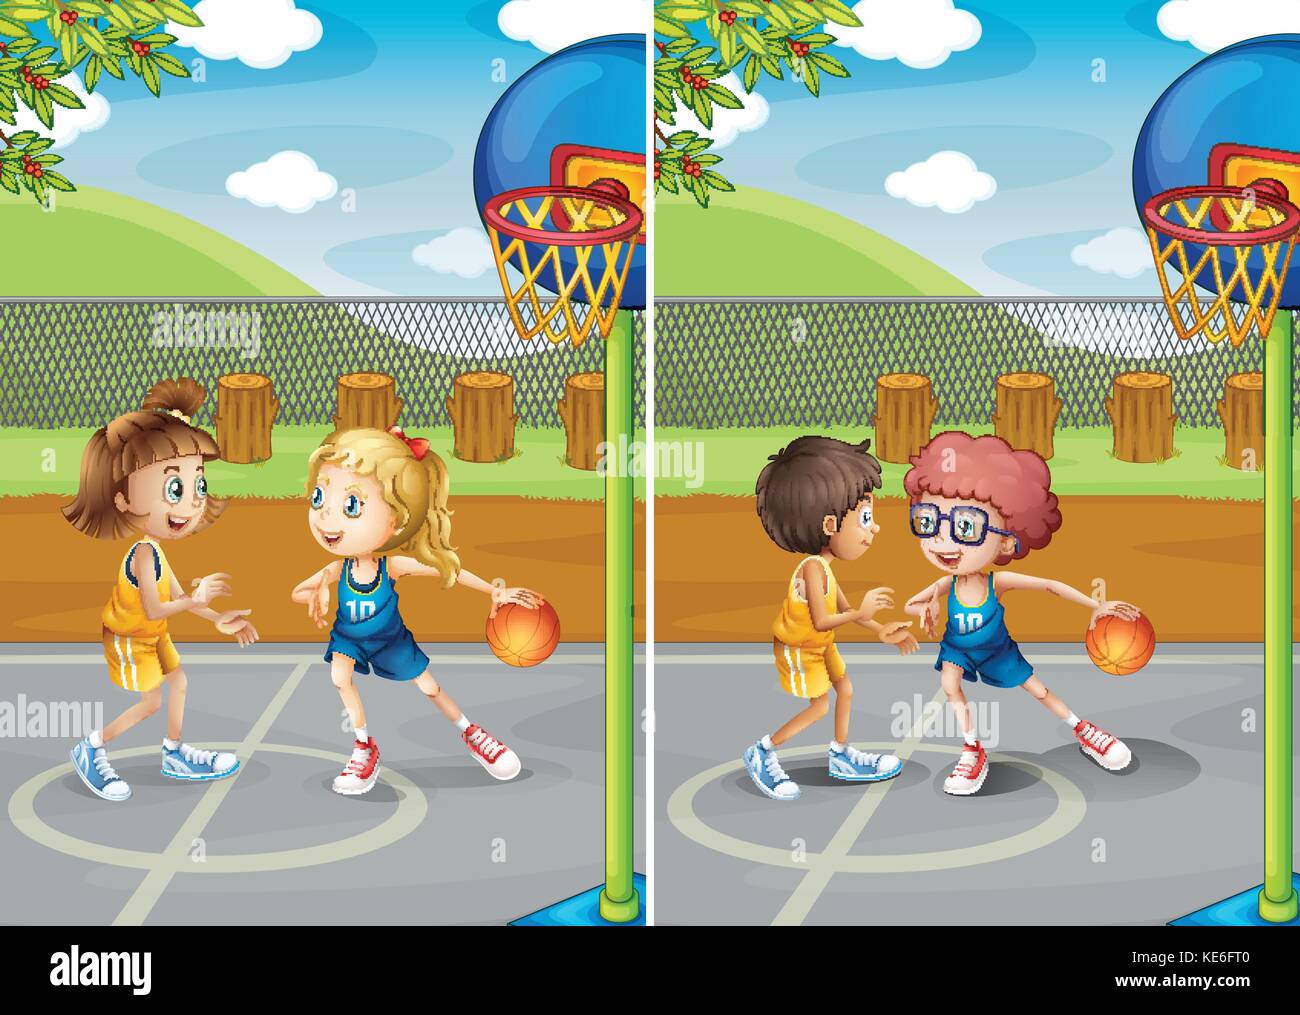 Boys and girls playing basketball illustration Stock Vector